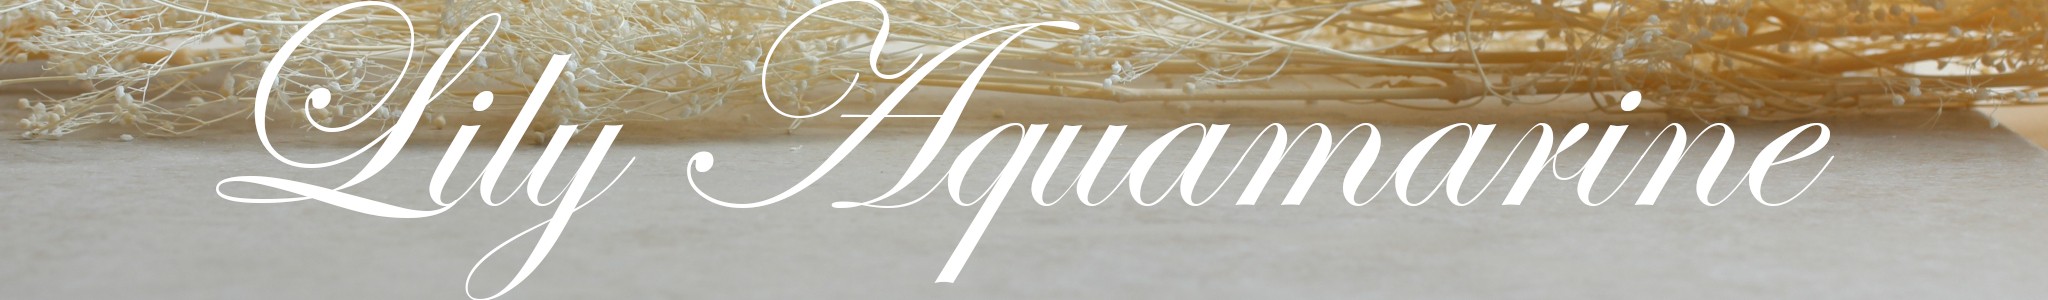 Lily Aquamarine Product Line Image